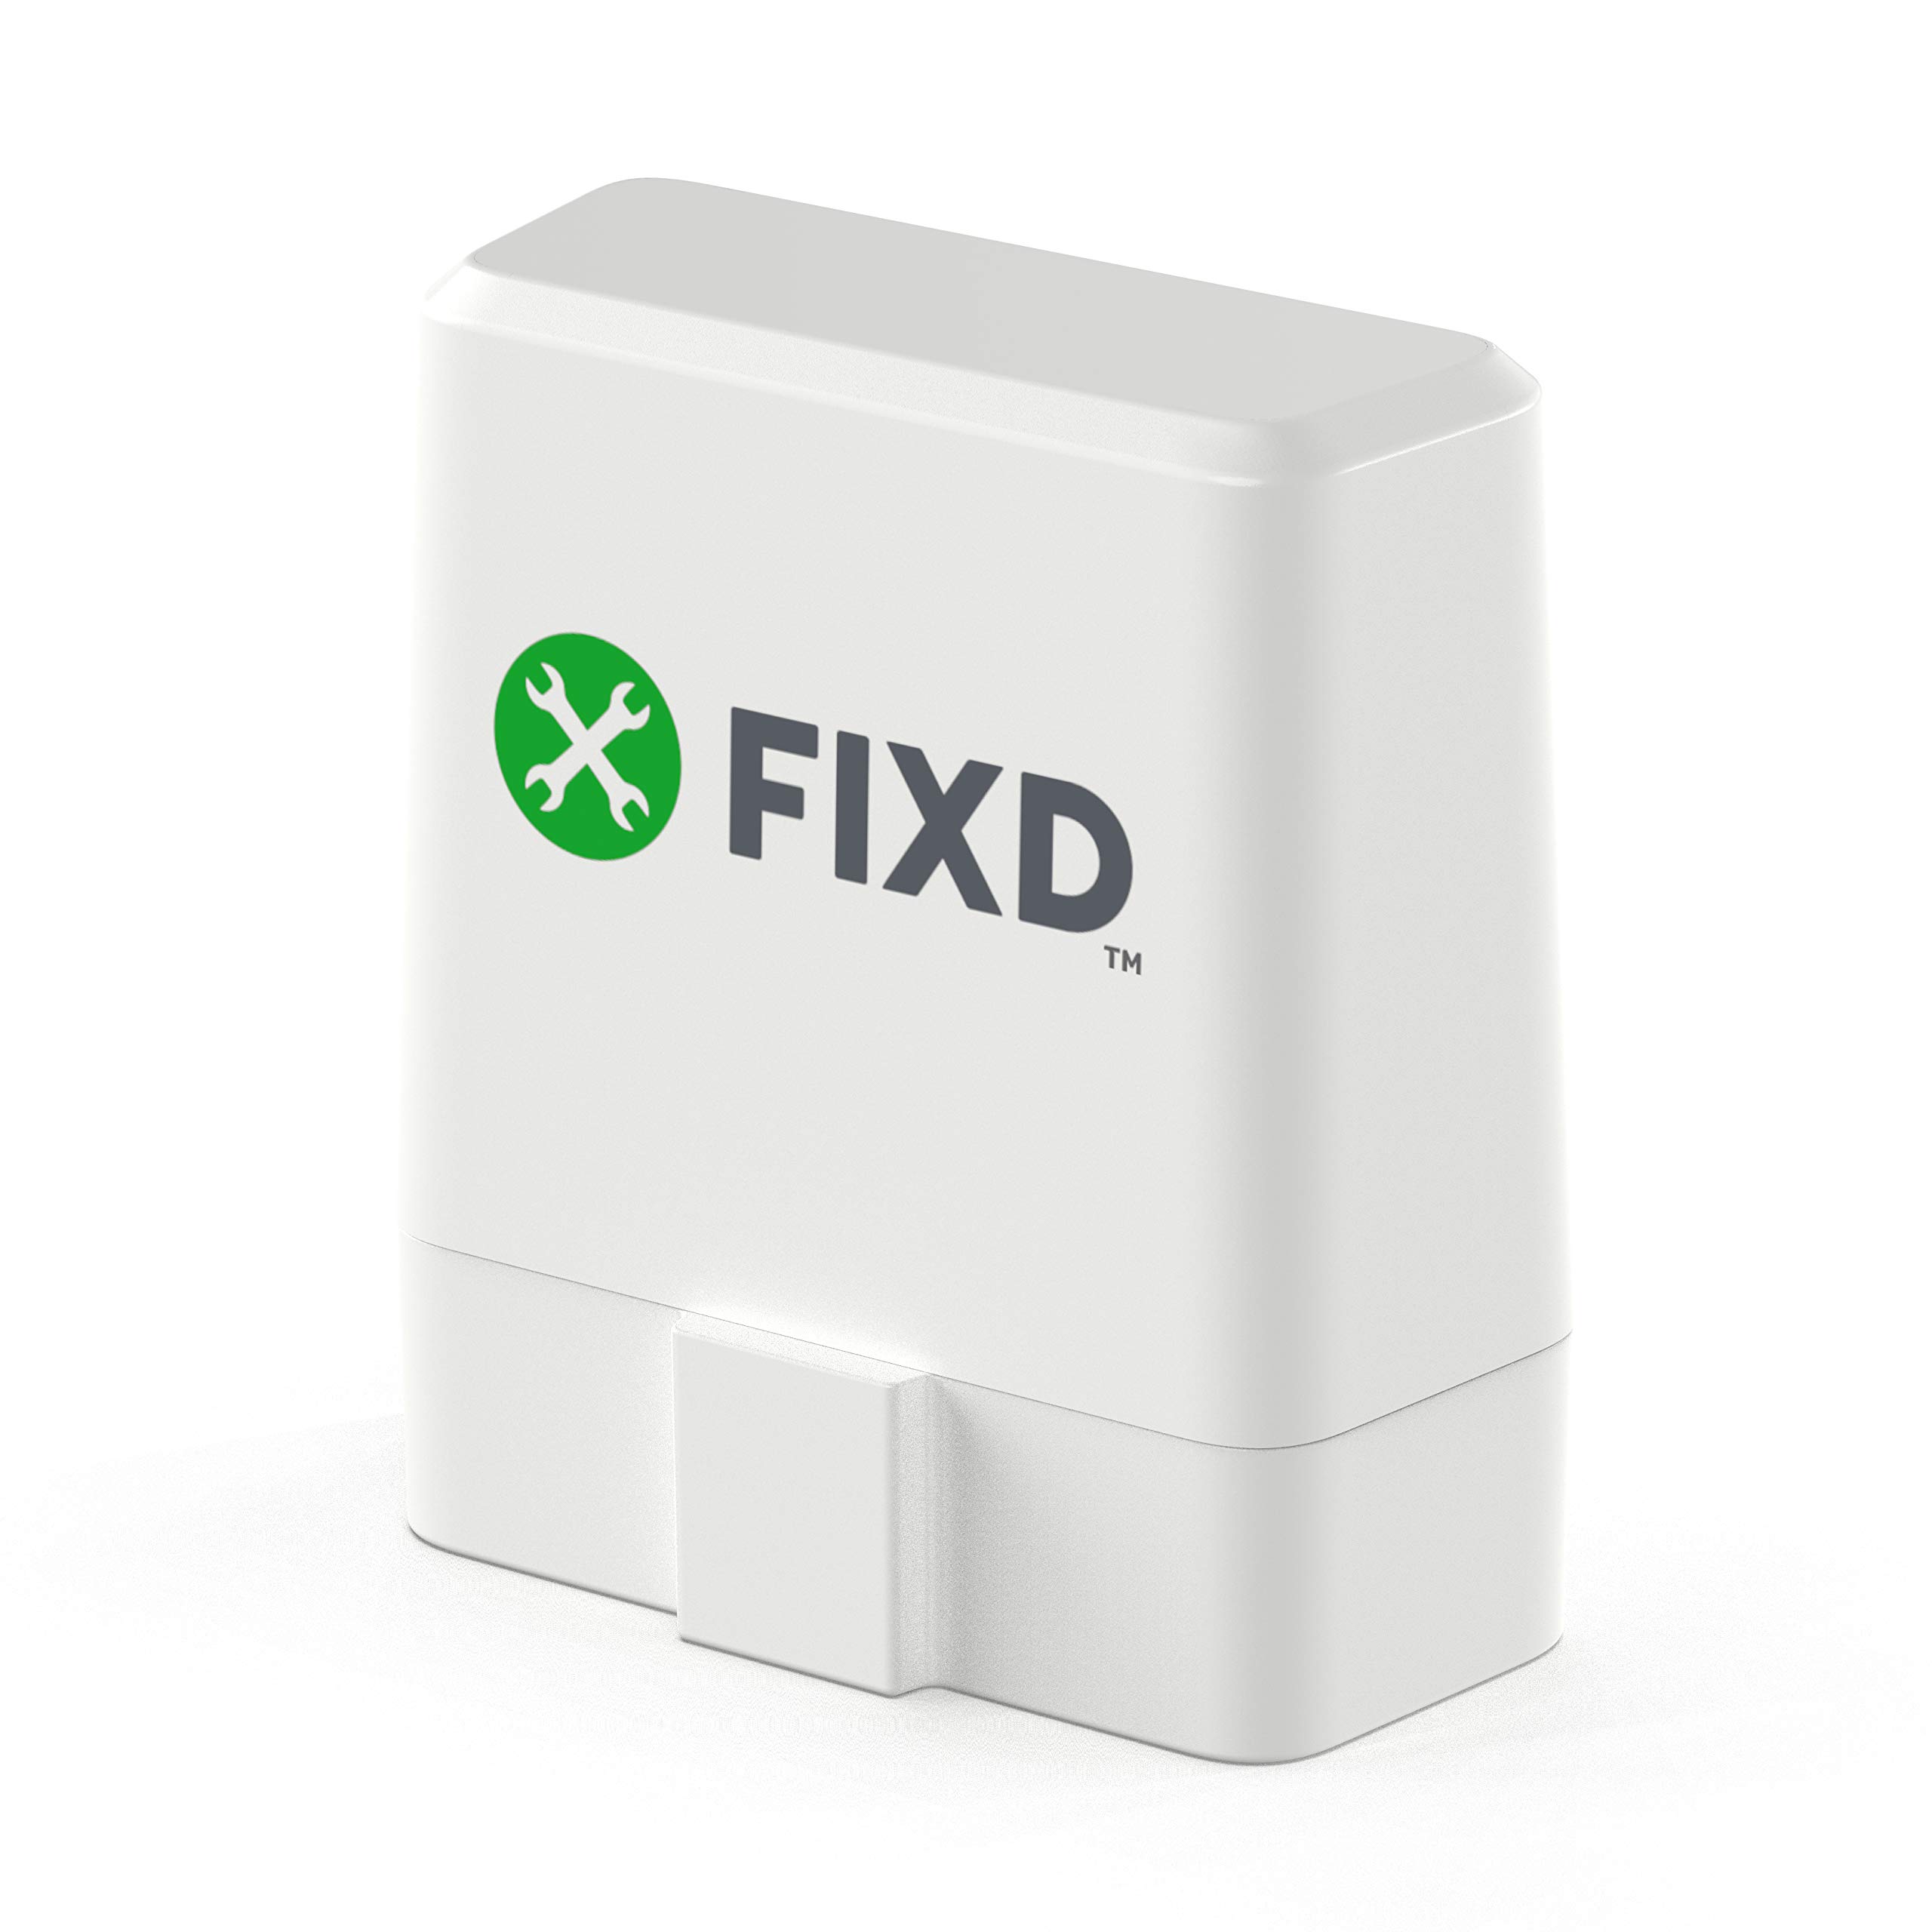  FIXD 자동차용 블루투스 OBD2 스캐너 - iPhone 및 Android용 자동차 코드 리더 및 스캔 도구 - 엔진을 확인하고 모든 자동차 및 차량 96 이상을 수정하는 무선...